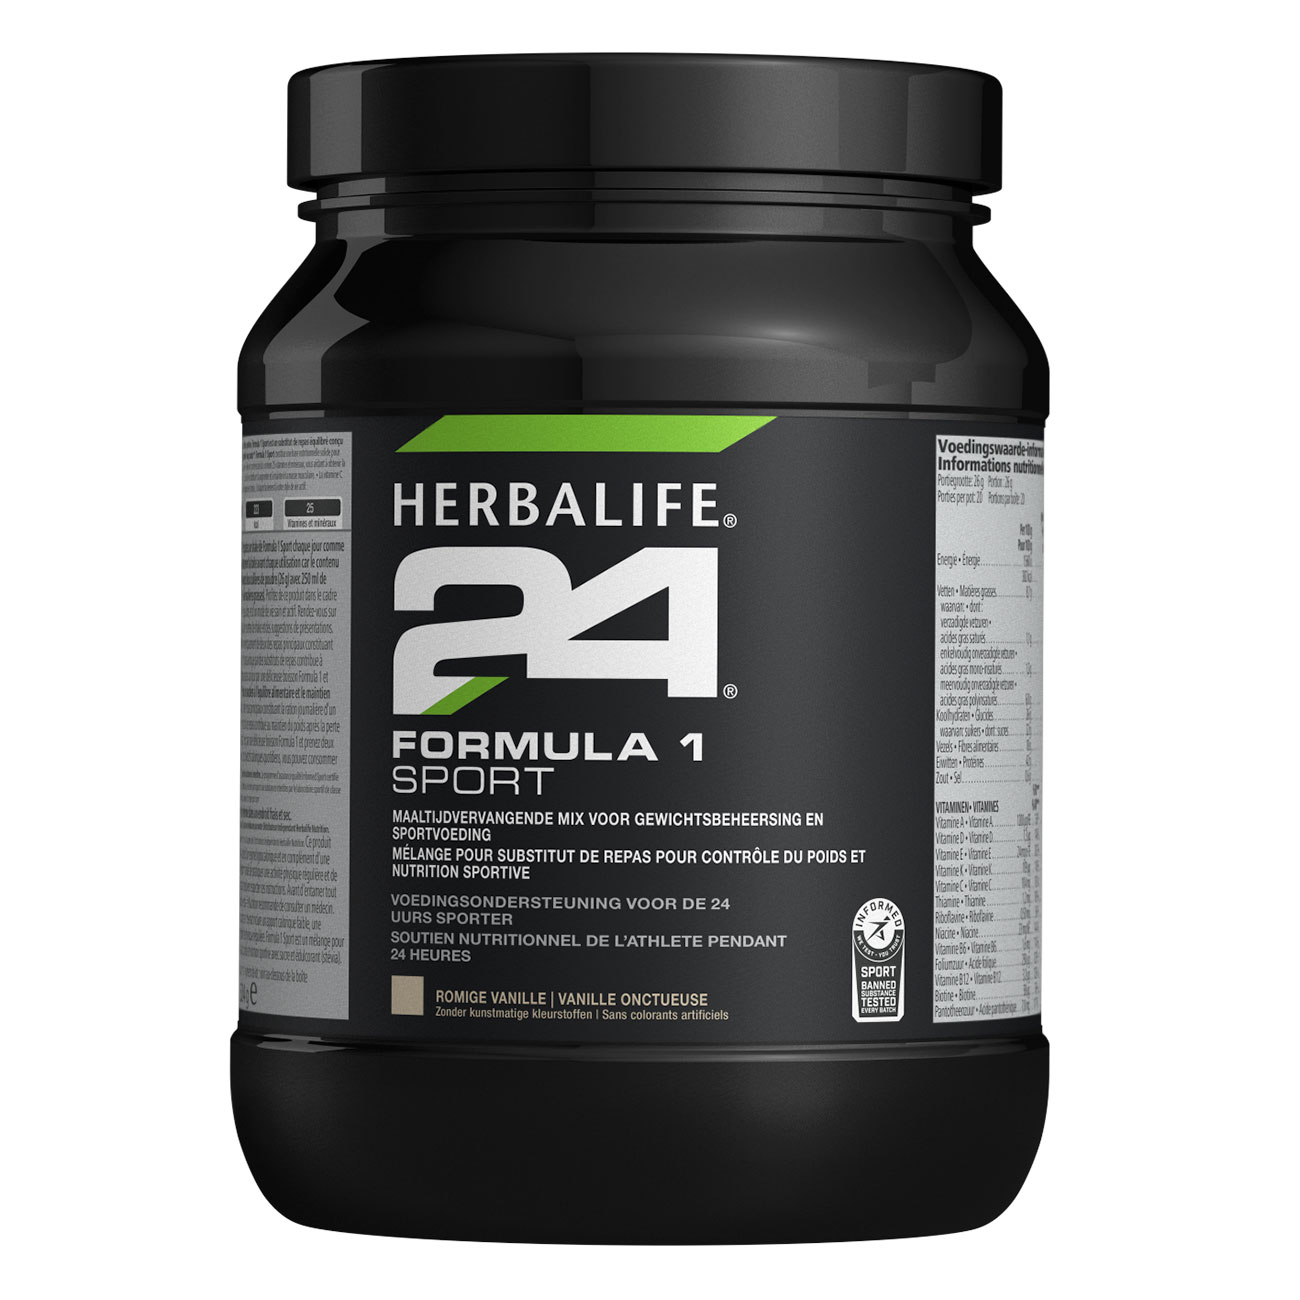 Herbalife24® Formula 1 Sport proteïne shake romige vanille product shot